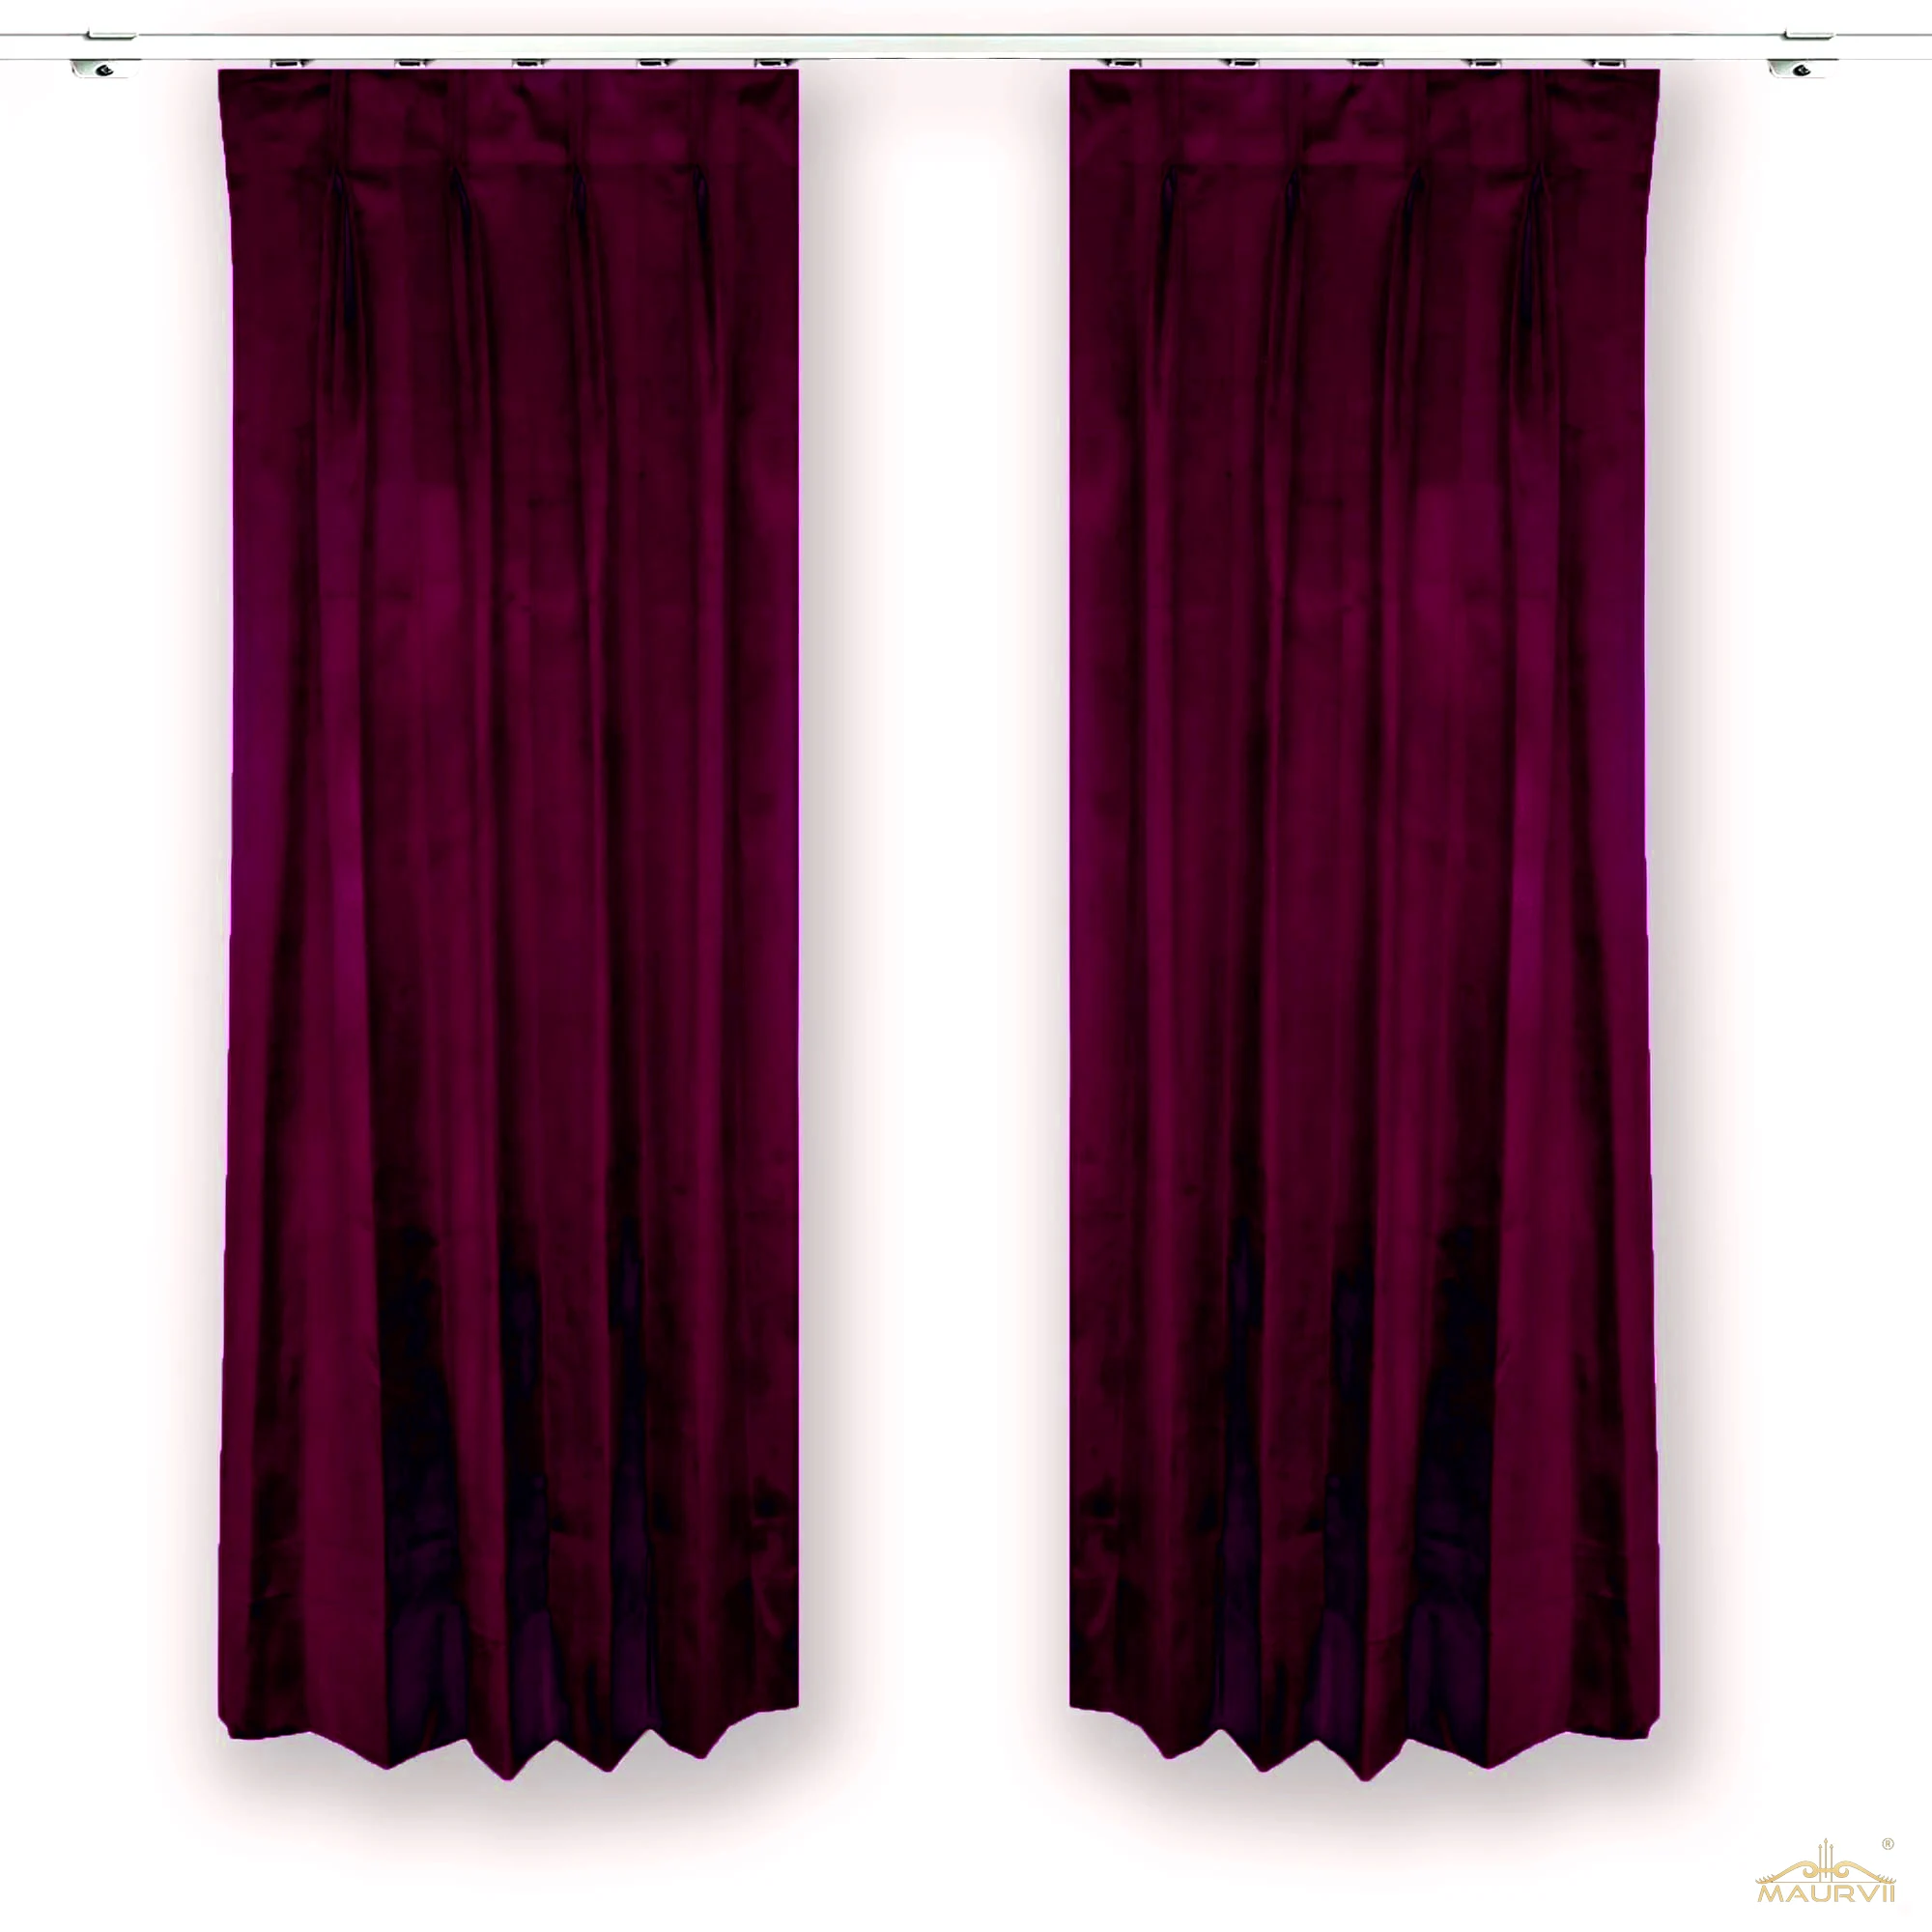 Burgundy room curtains